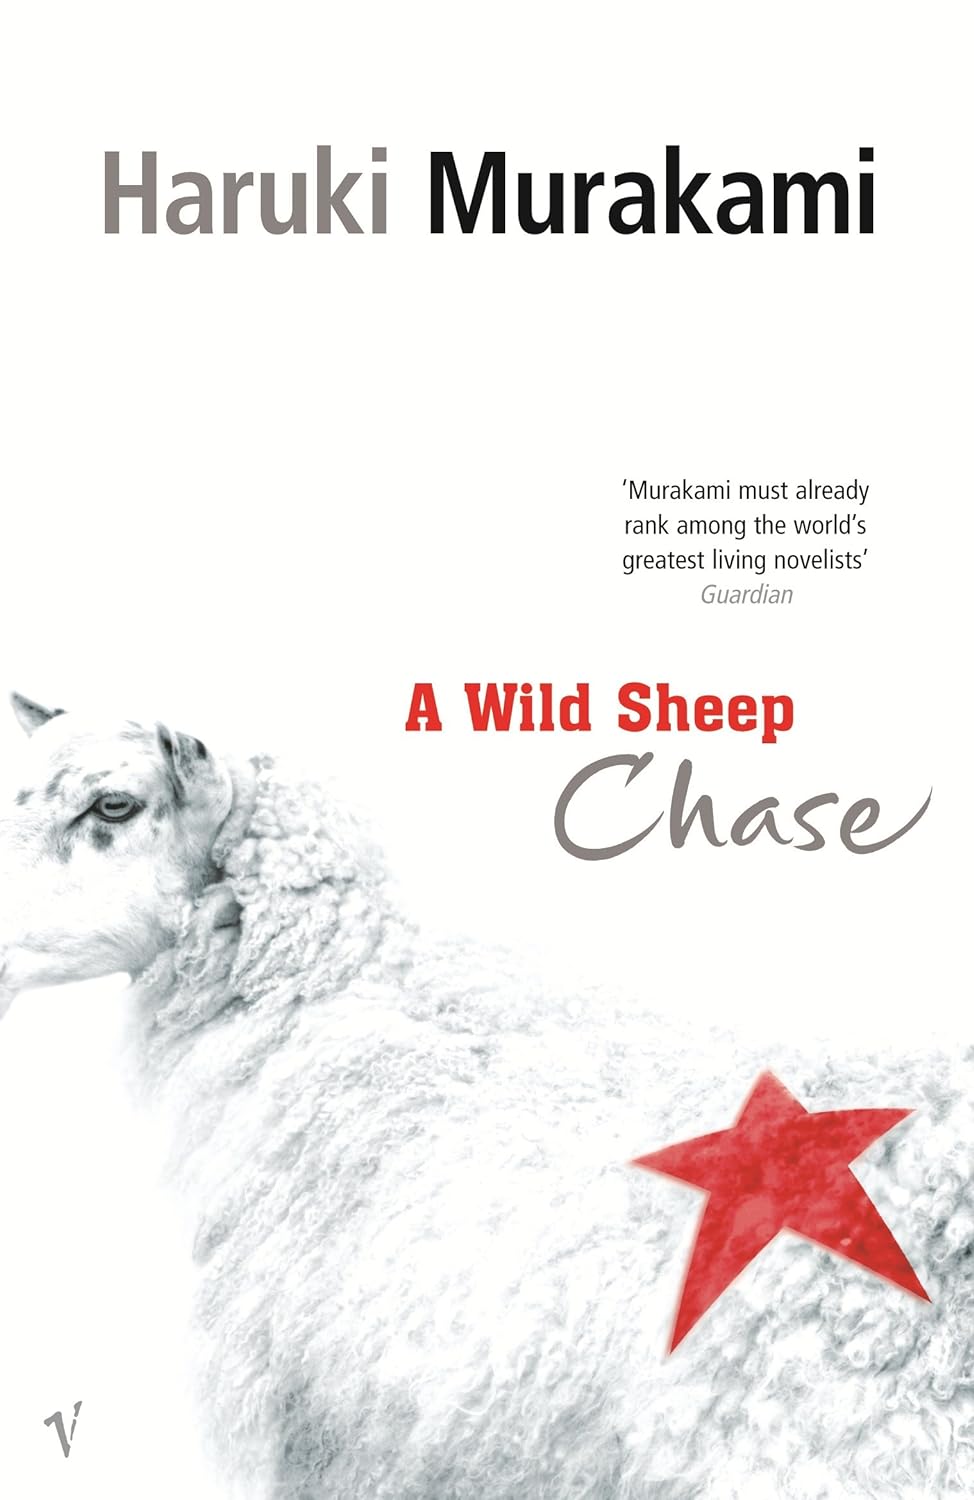 A Wild Sheep Chase Paperback by Haruki Murakami (Author)